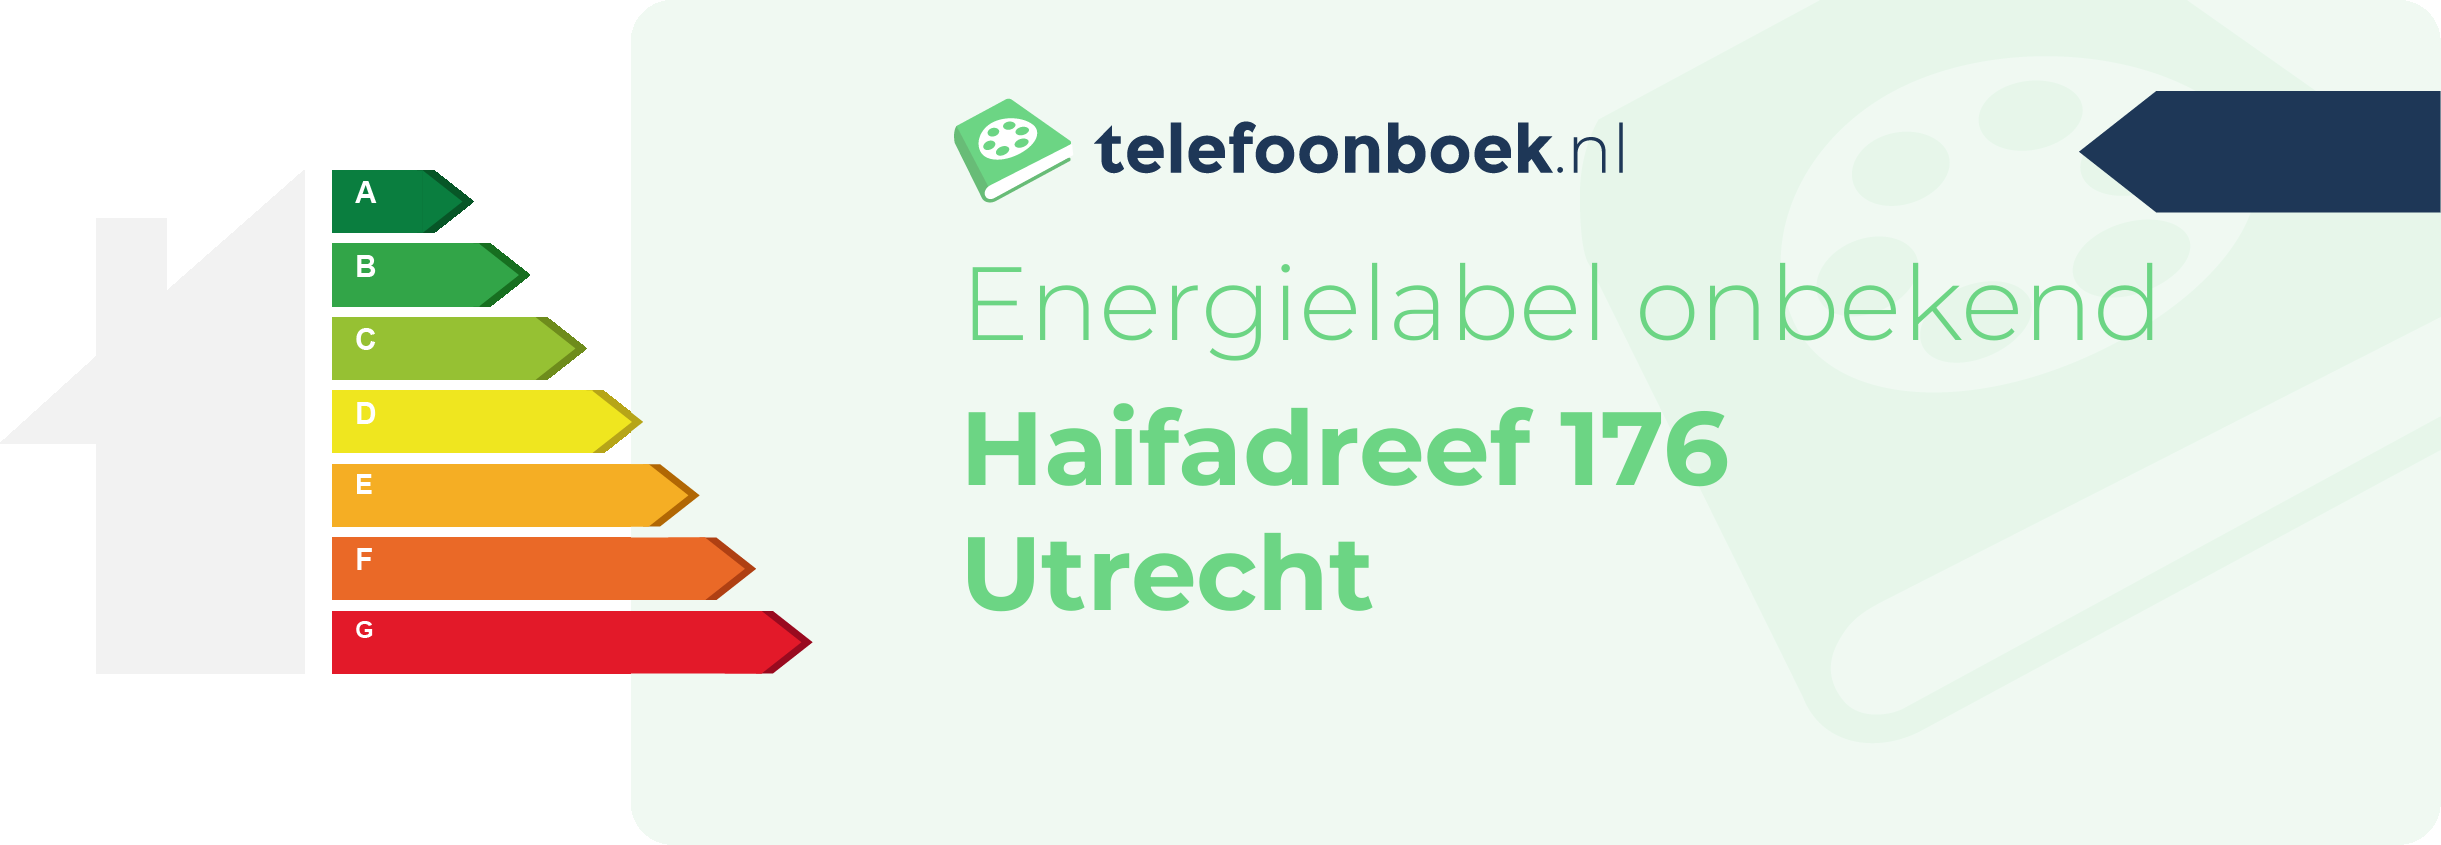 Energielabel Haifadreef 176 Utrecht